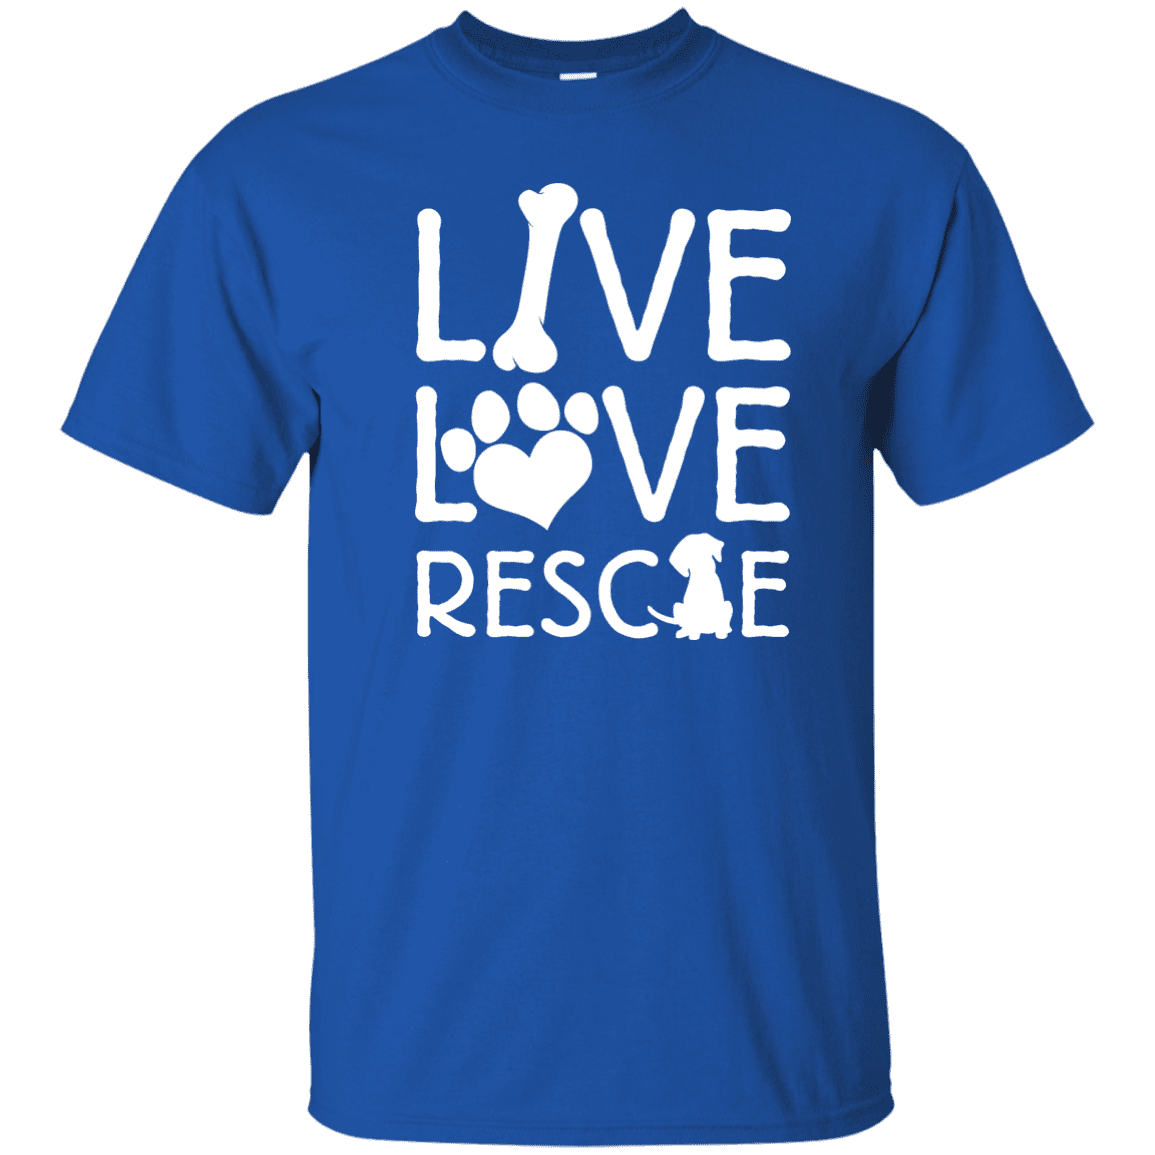 Live Love Rescue - T Shirt.